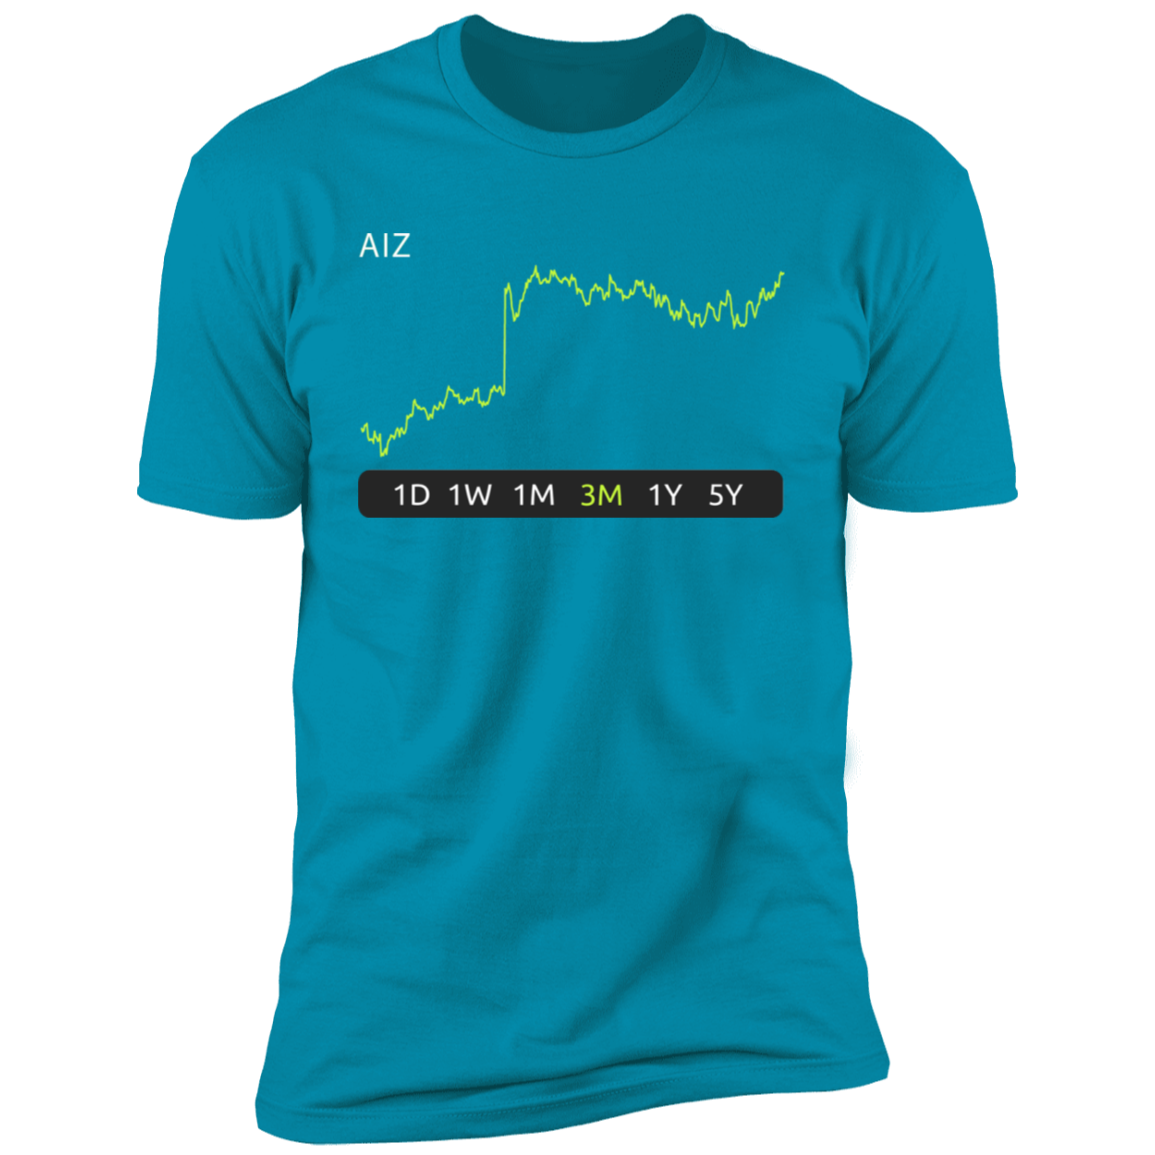 AIZ Stock 3m Premium T-Shirt